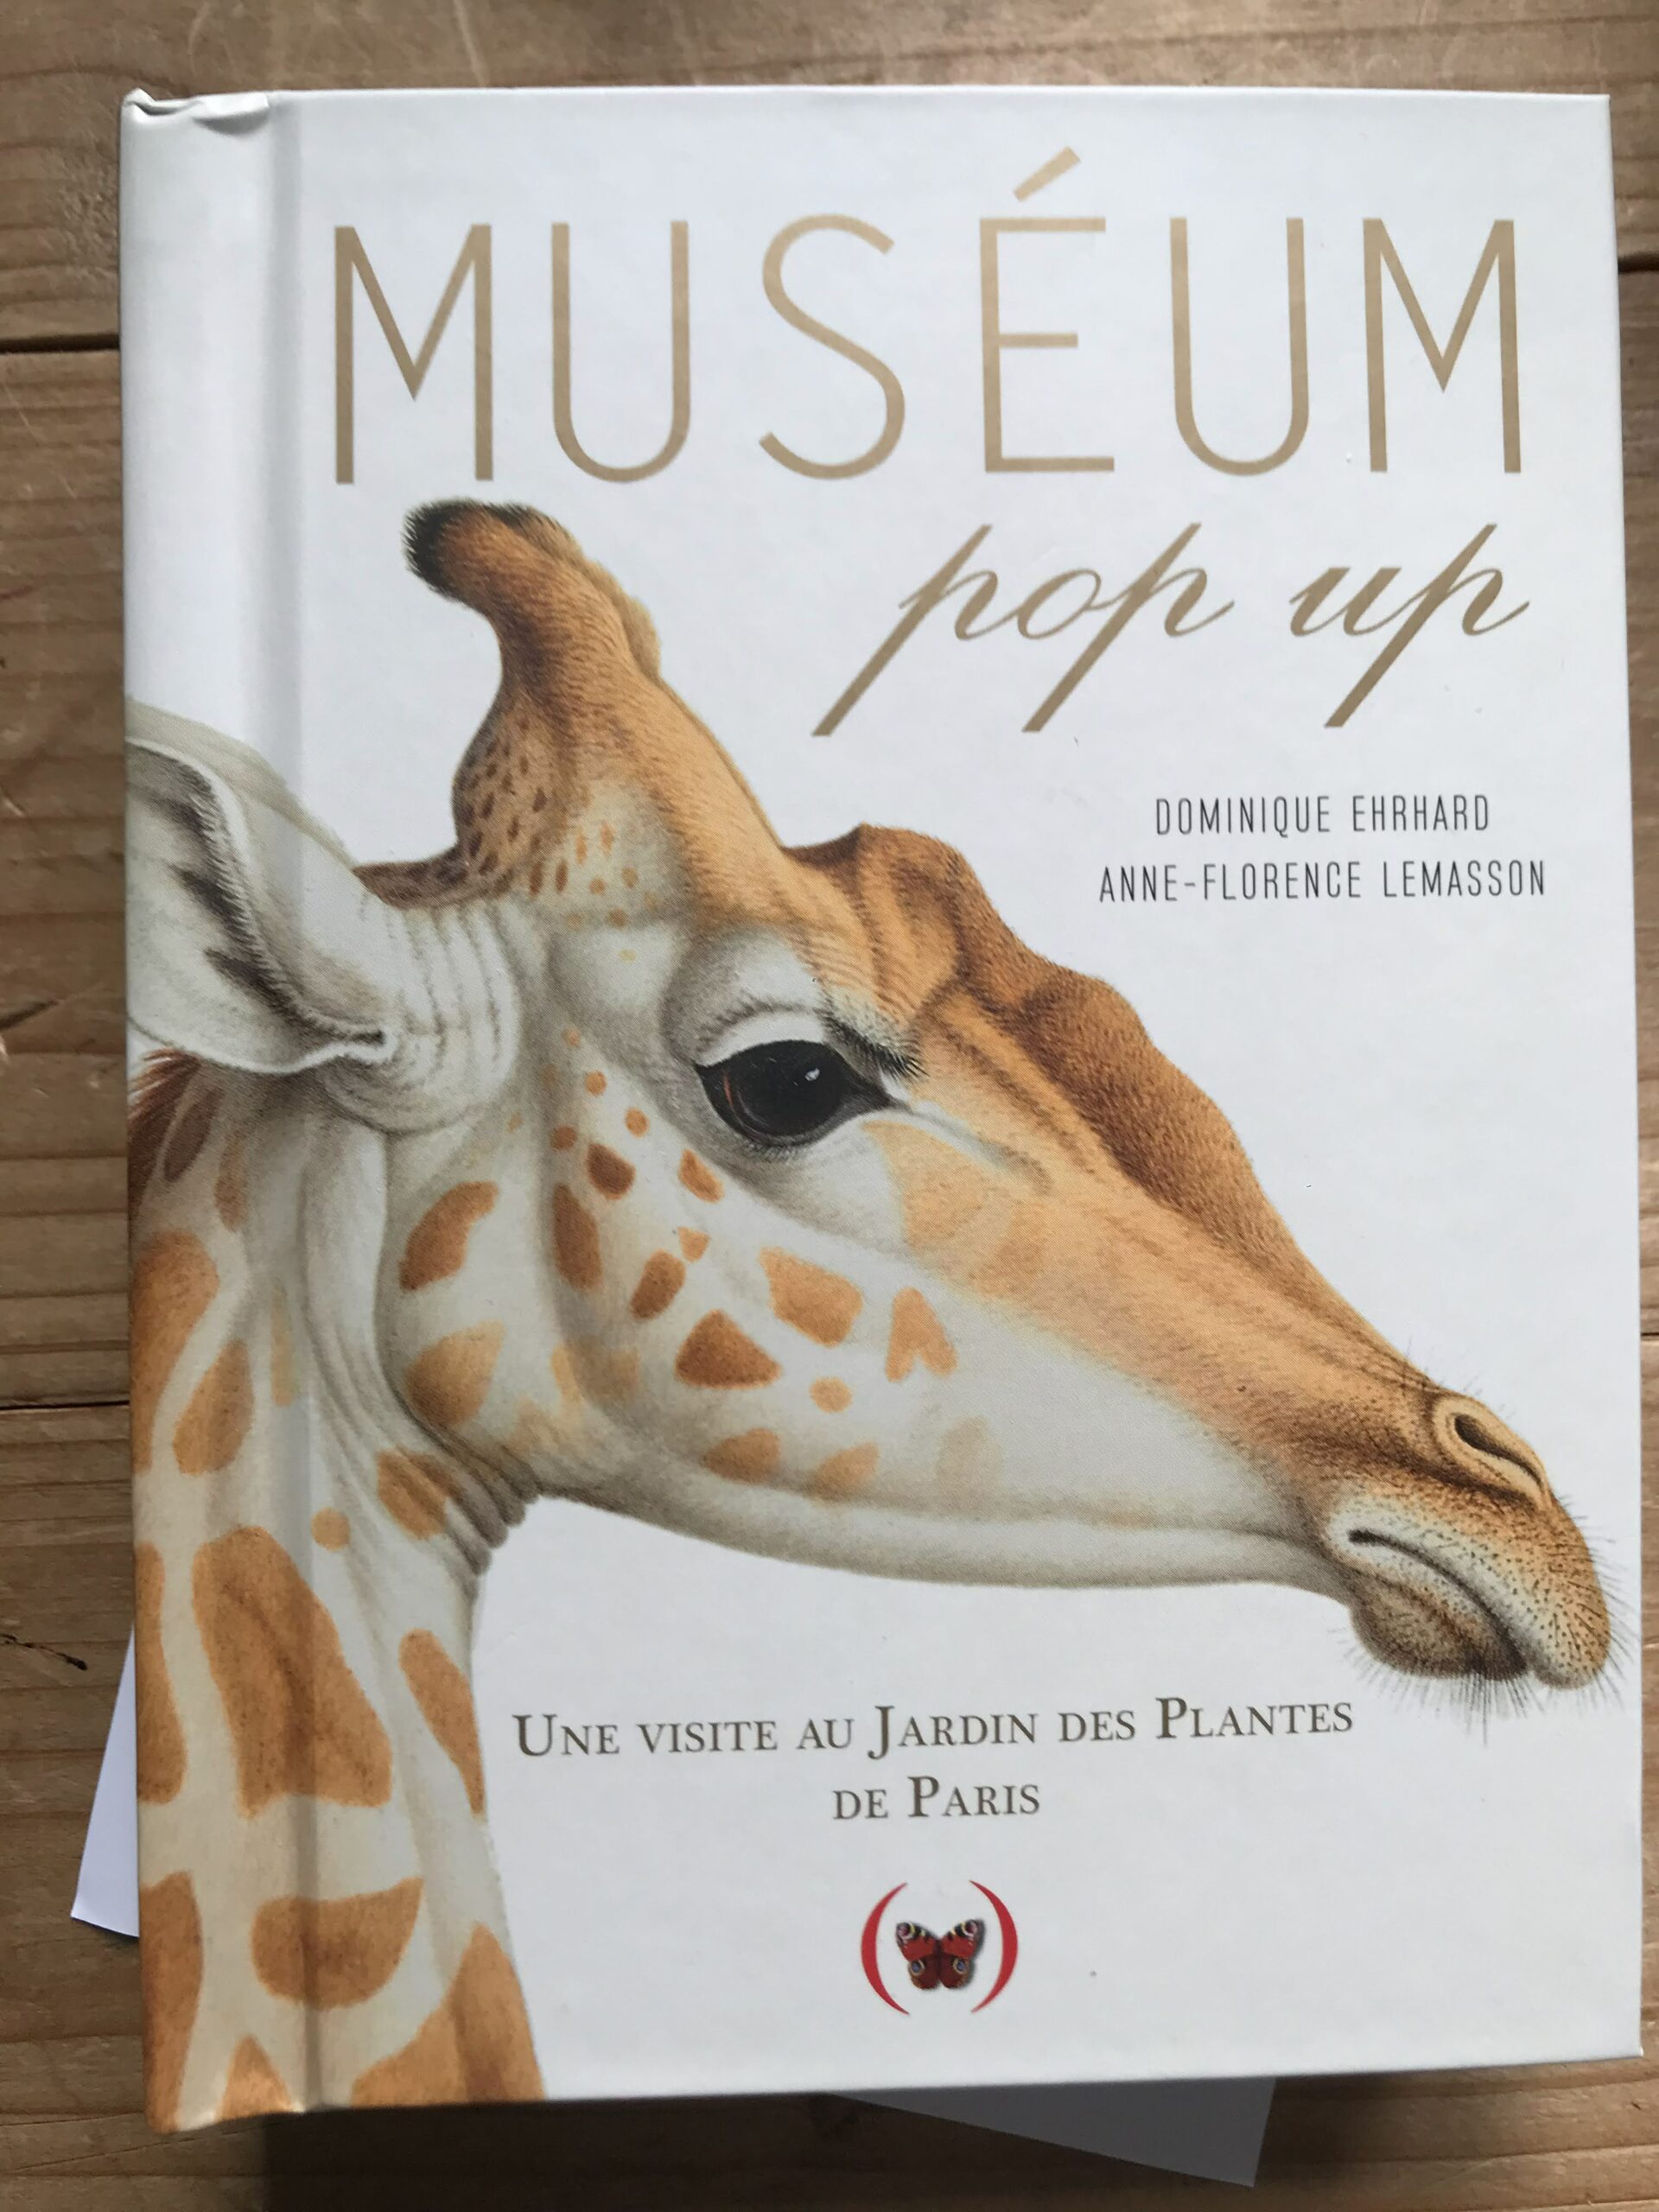 Muséum pop up